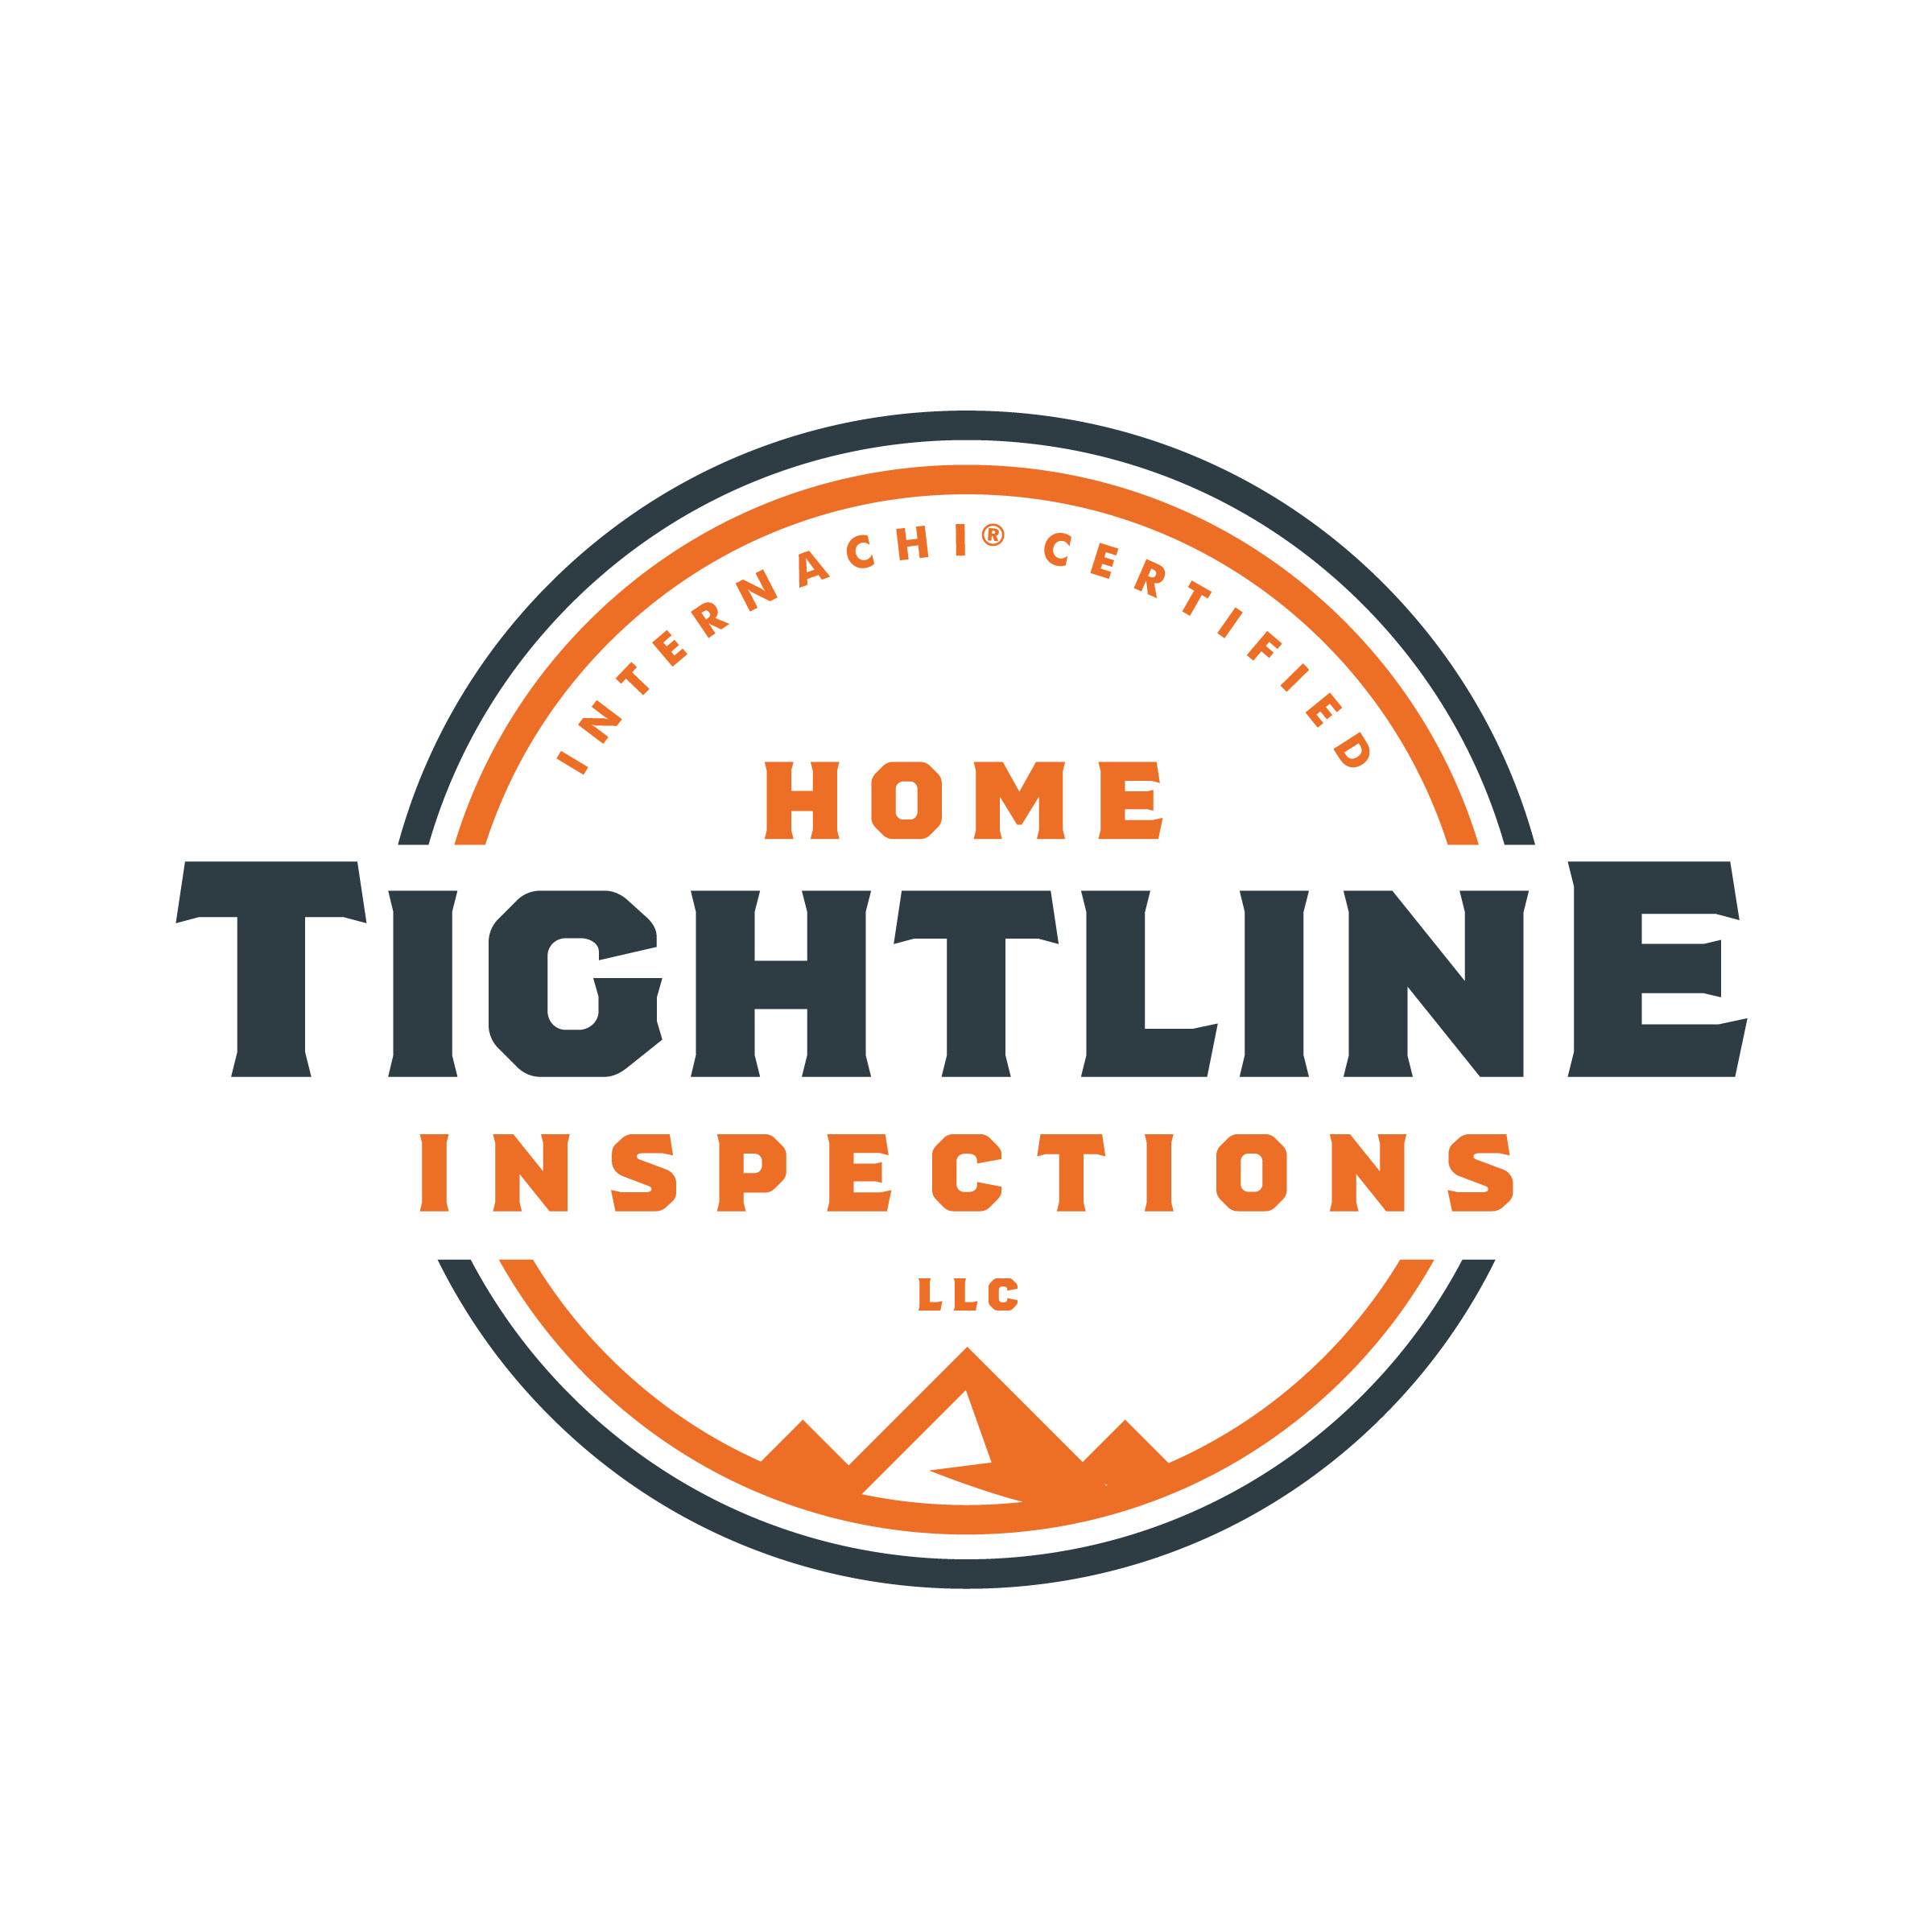 Tightline Home Inspections, LLC Logo